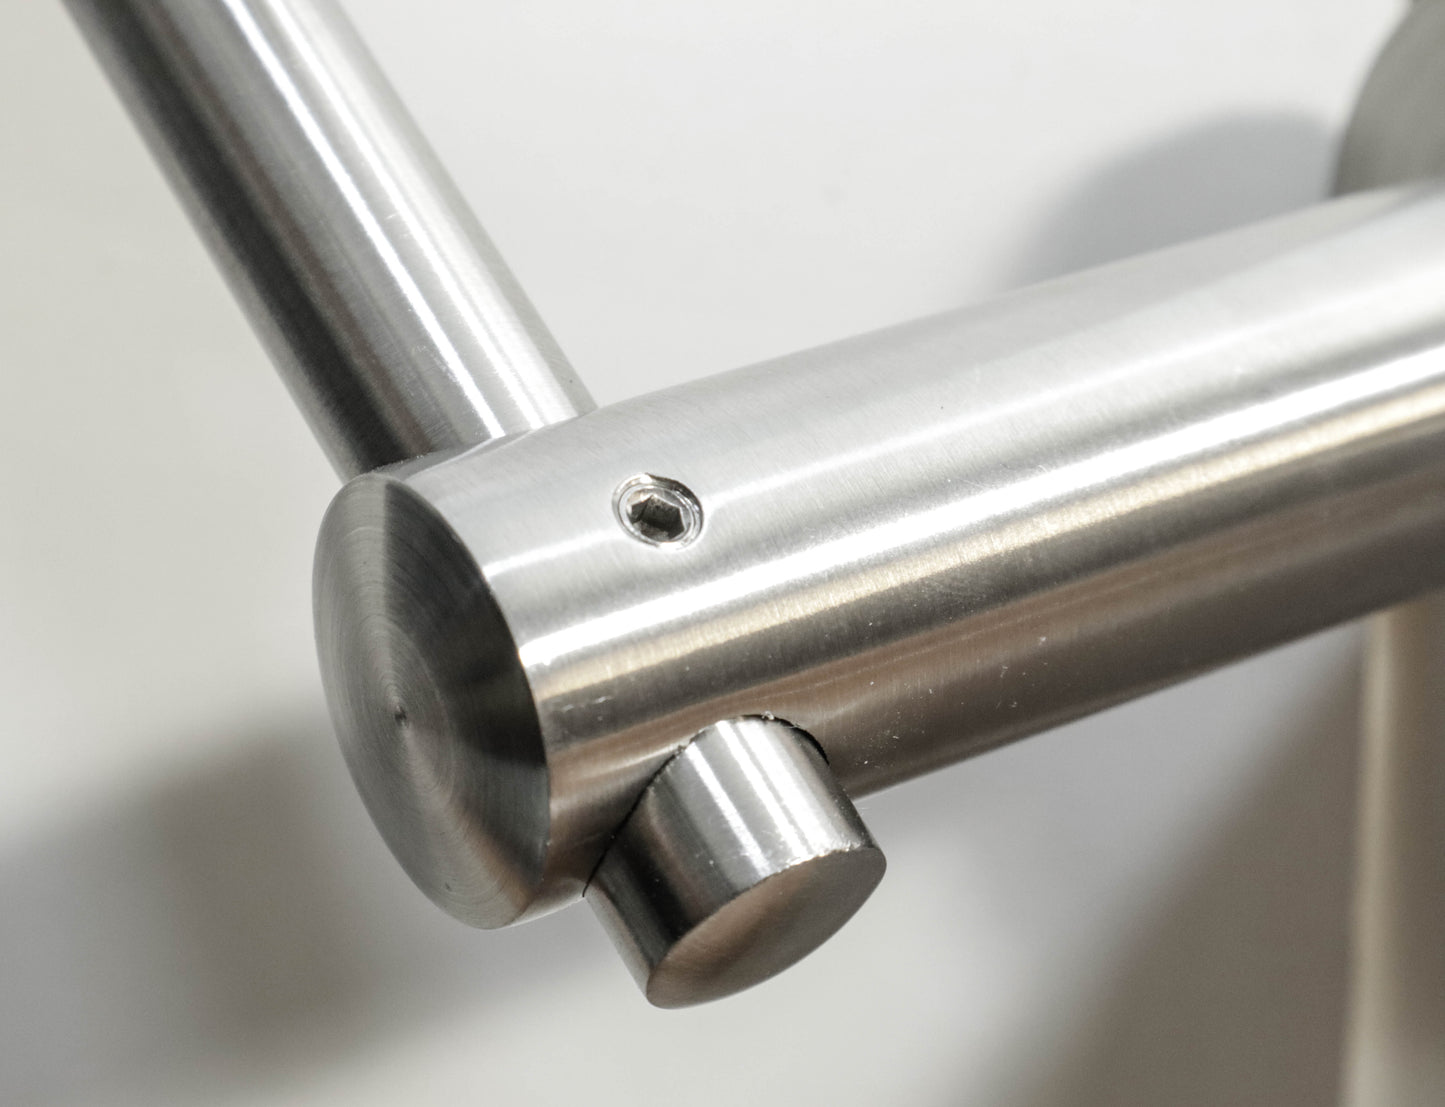 Stainless Steel Glass Mount Handrail Bracket for 1 1/2" Round or Square Tube  Satin Finish T316 Marine Grade (G1020) - SHEMONICO